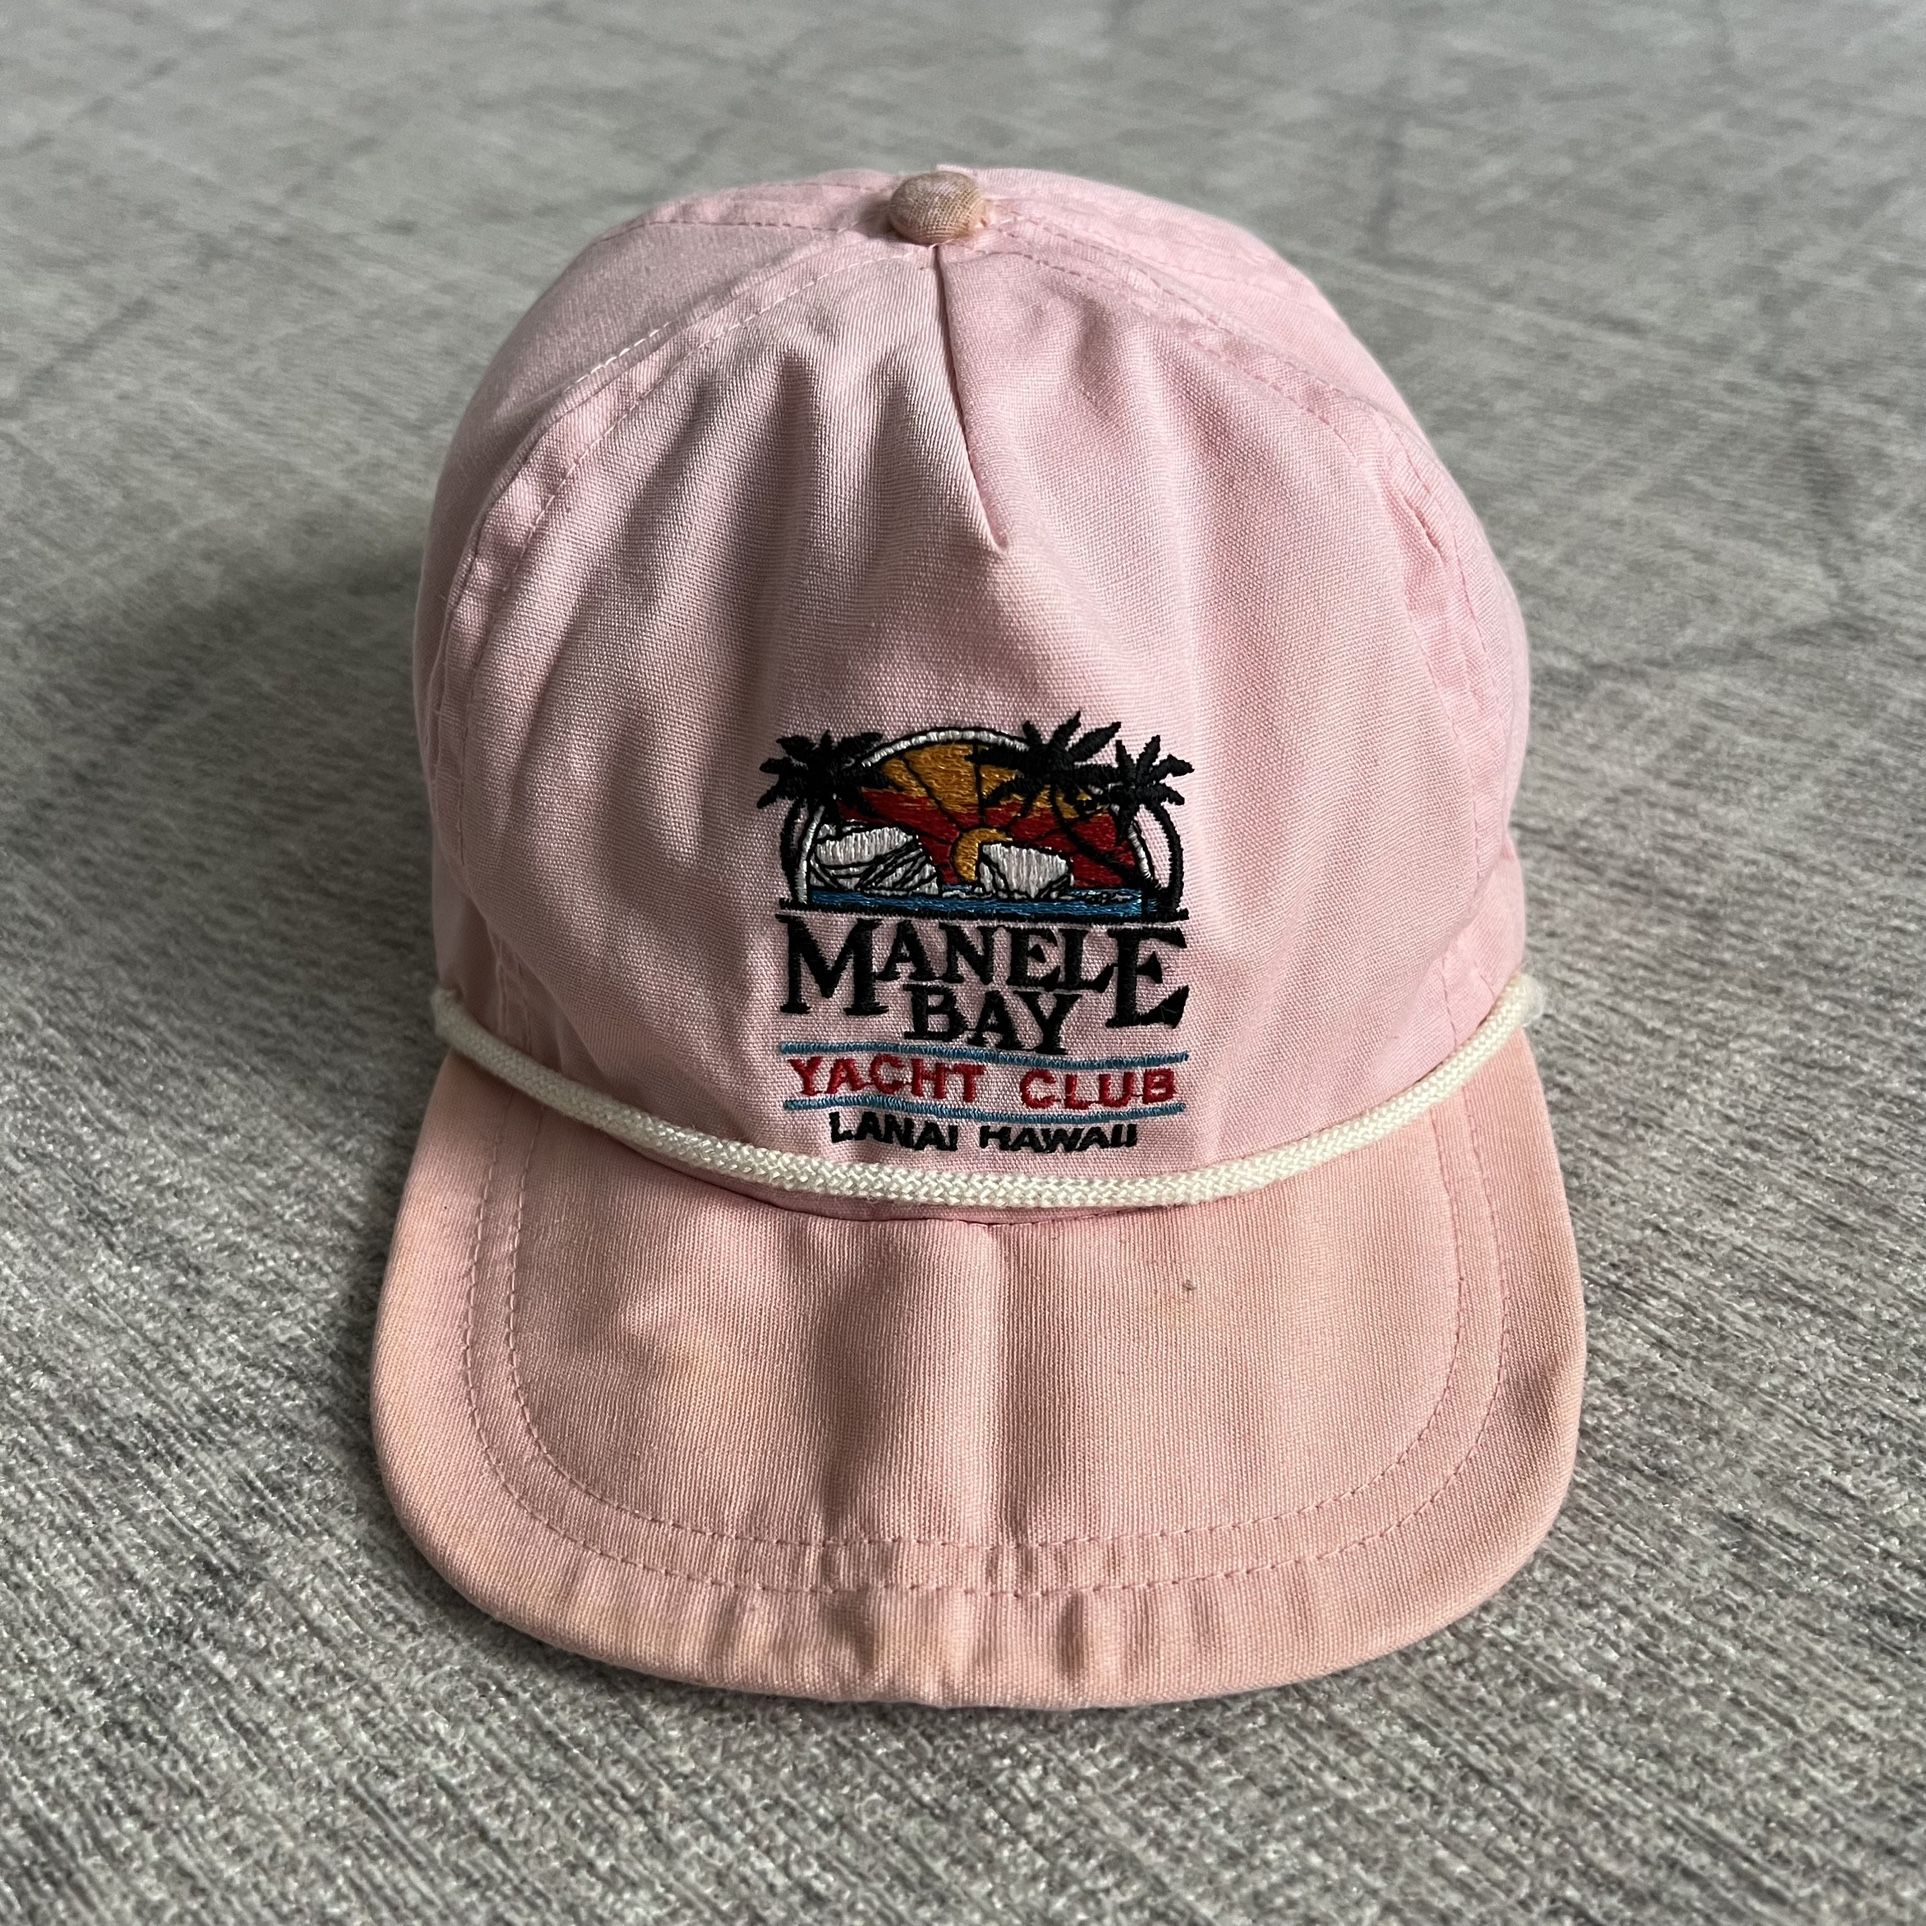 Vintage 1990s Manele Bay Yacht Club Lanai Hawaii Pink Adjustable Strapback Hat